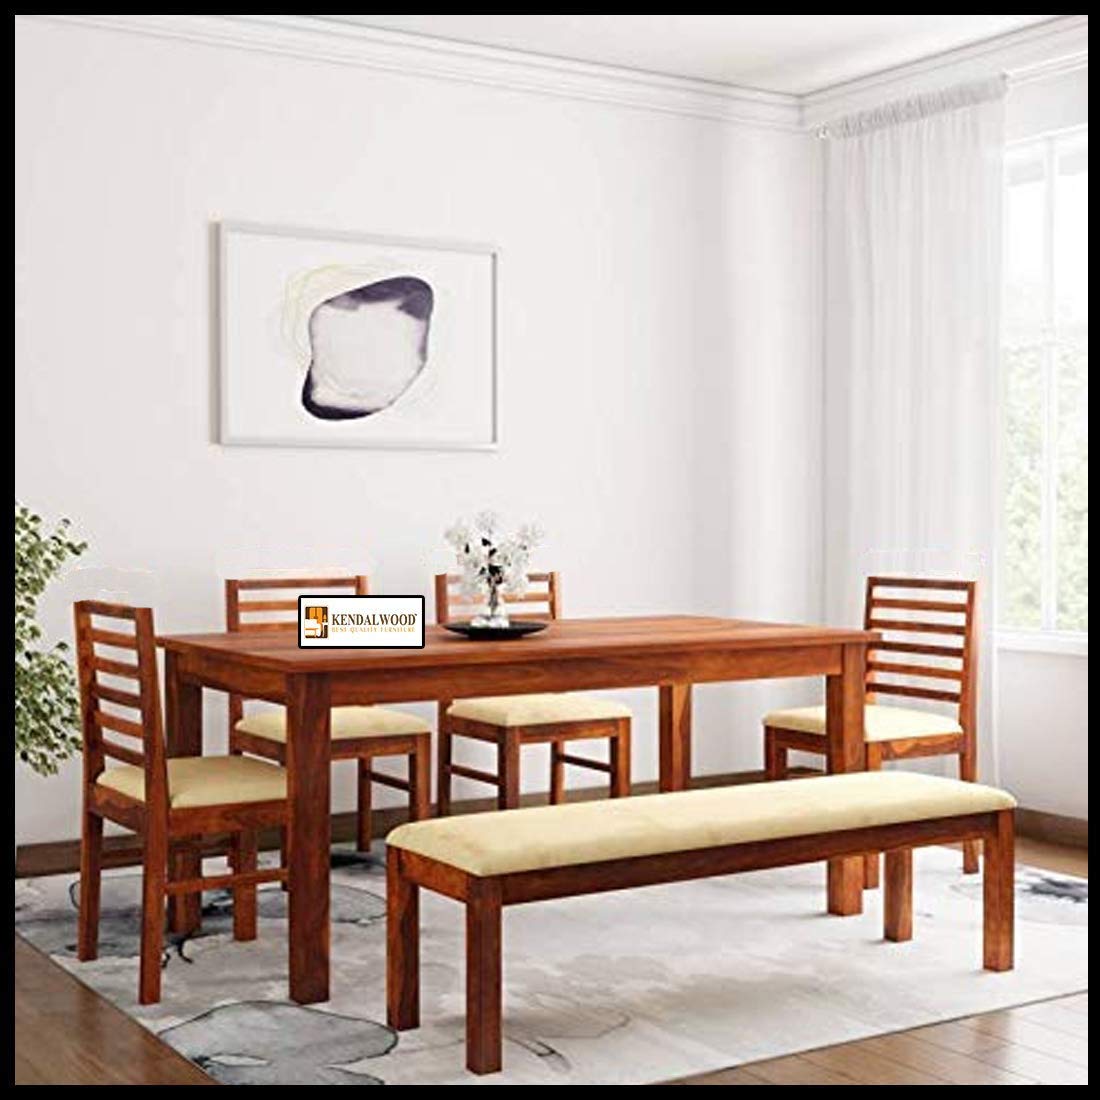 Kendalwood Furniture Sheesham Wood, Cream Colored Dining Room Chair Cushions